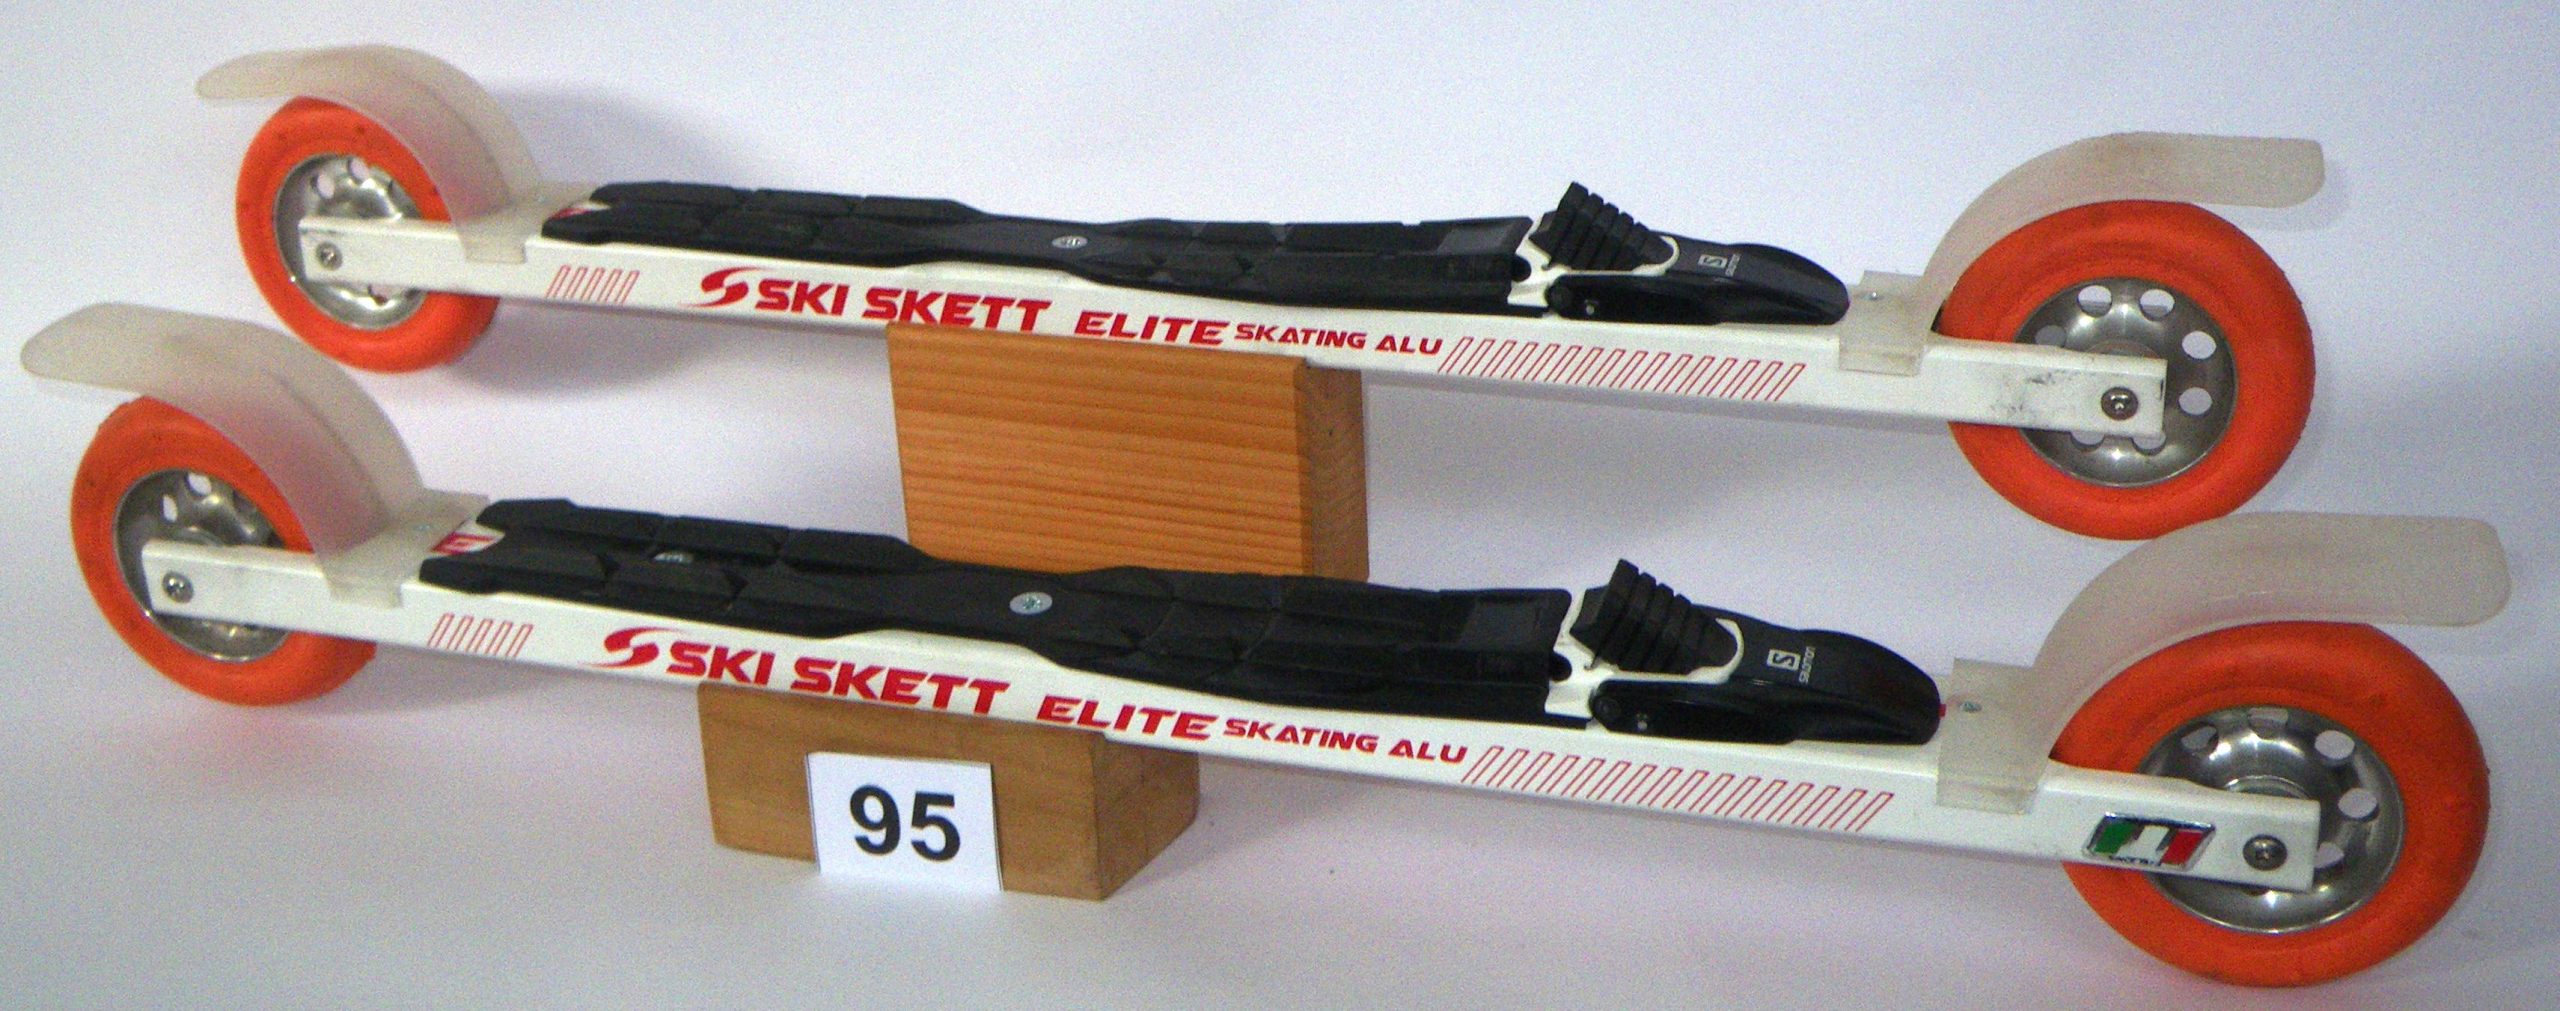 Roller Ski e Skiroll Skiskett prodotto Elite Skate ALU 95